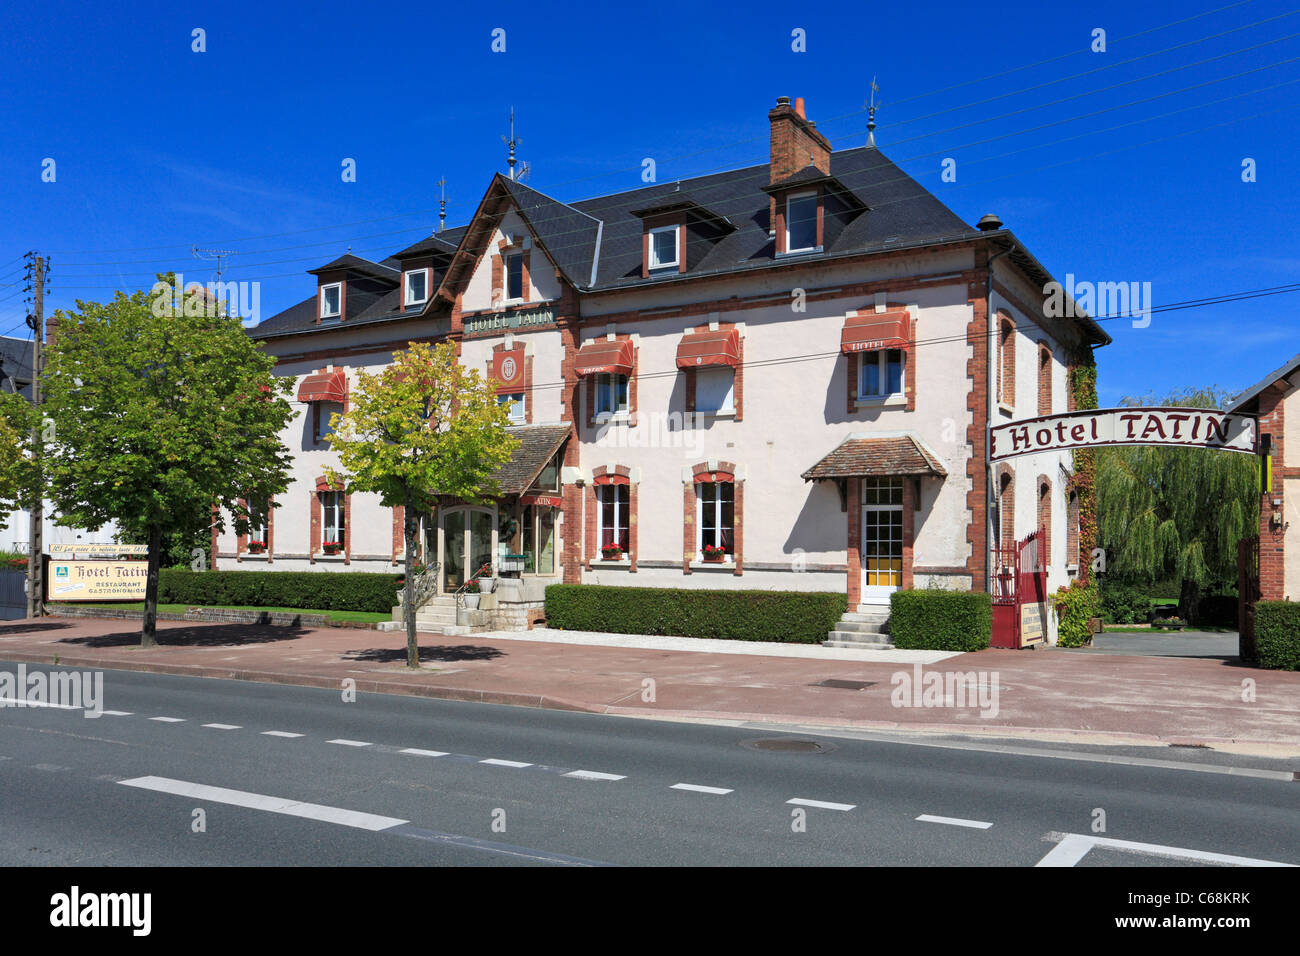 Hotel Tatin where Tarte Tatin was first created in 1889, Lamotte Beuvron, Sologne, France, Europe. Stock Photo